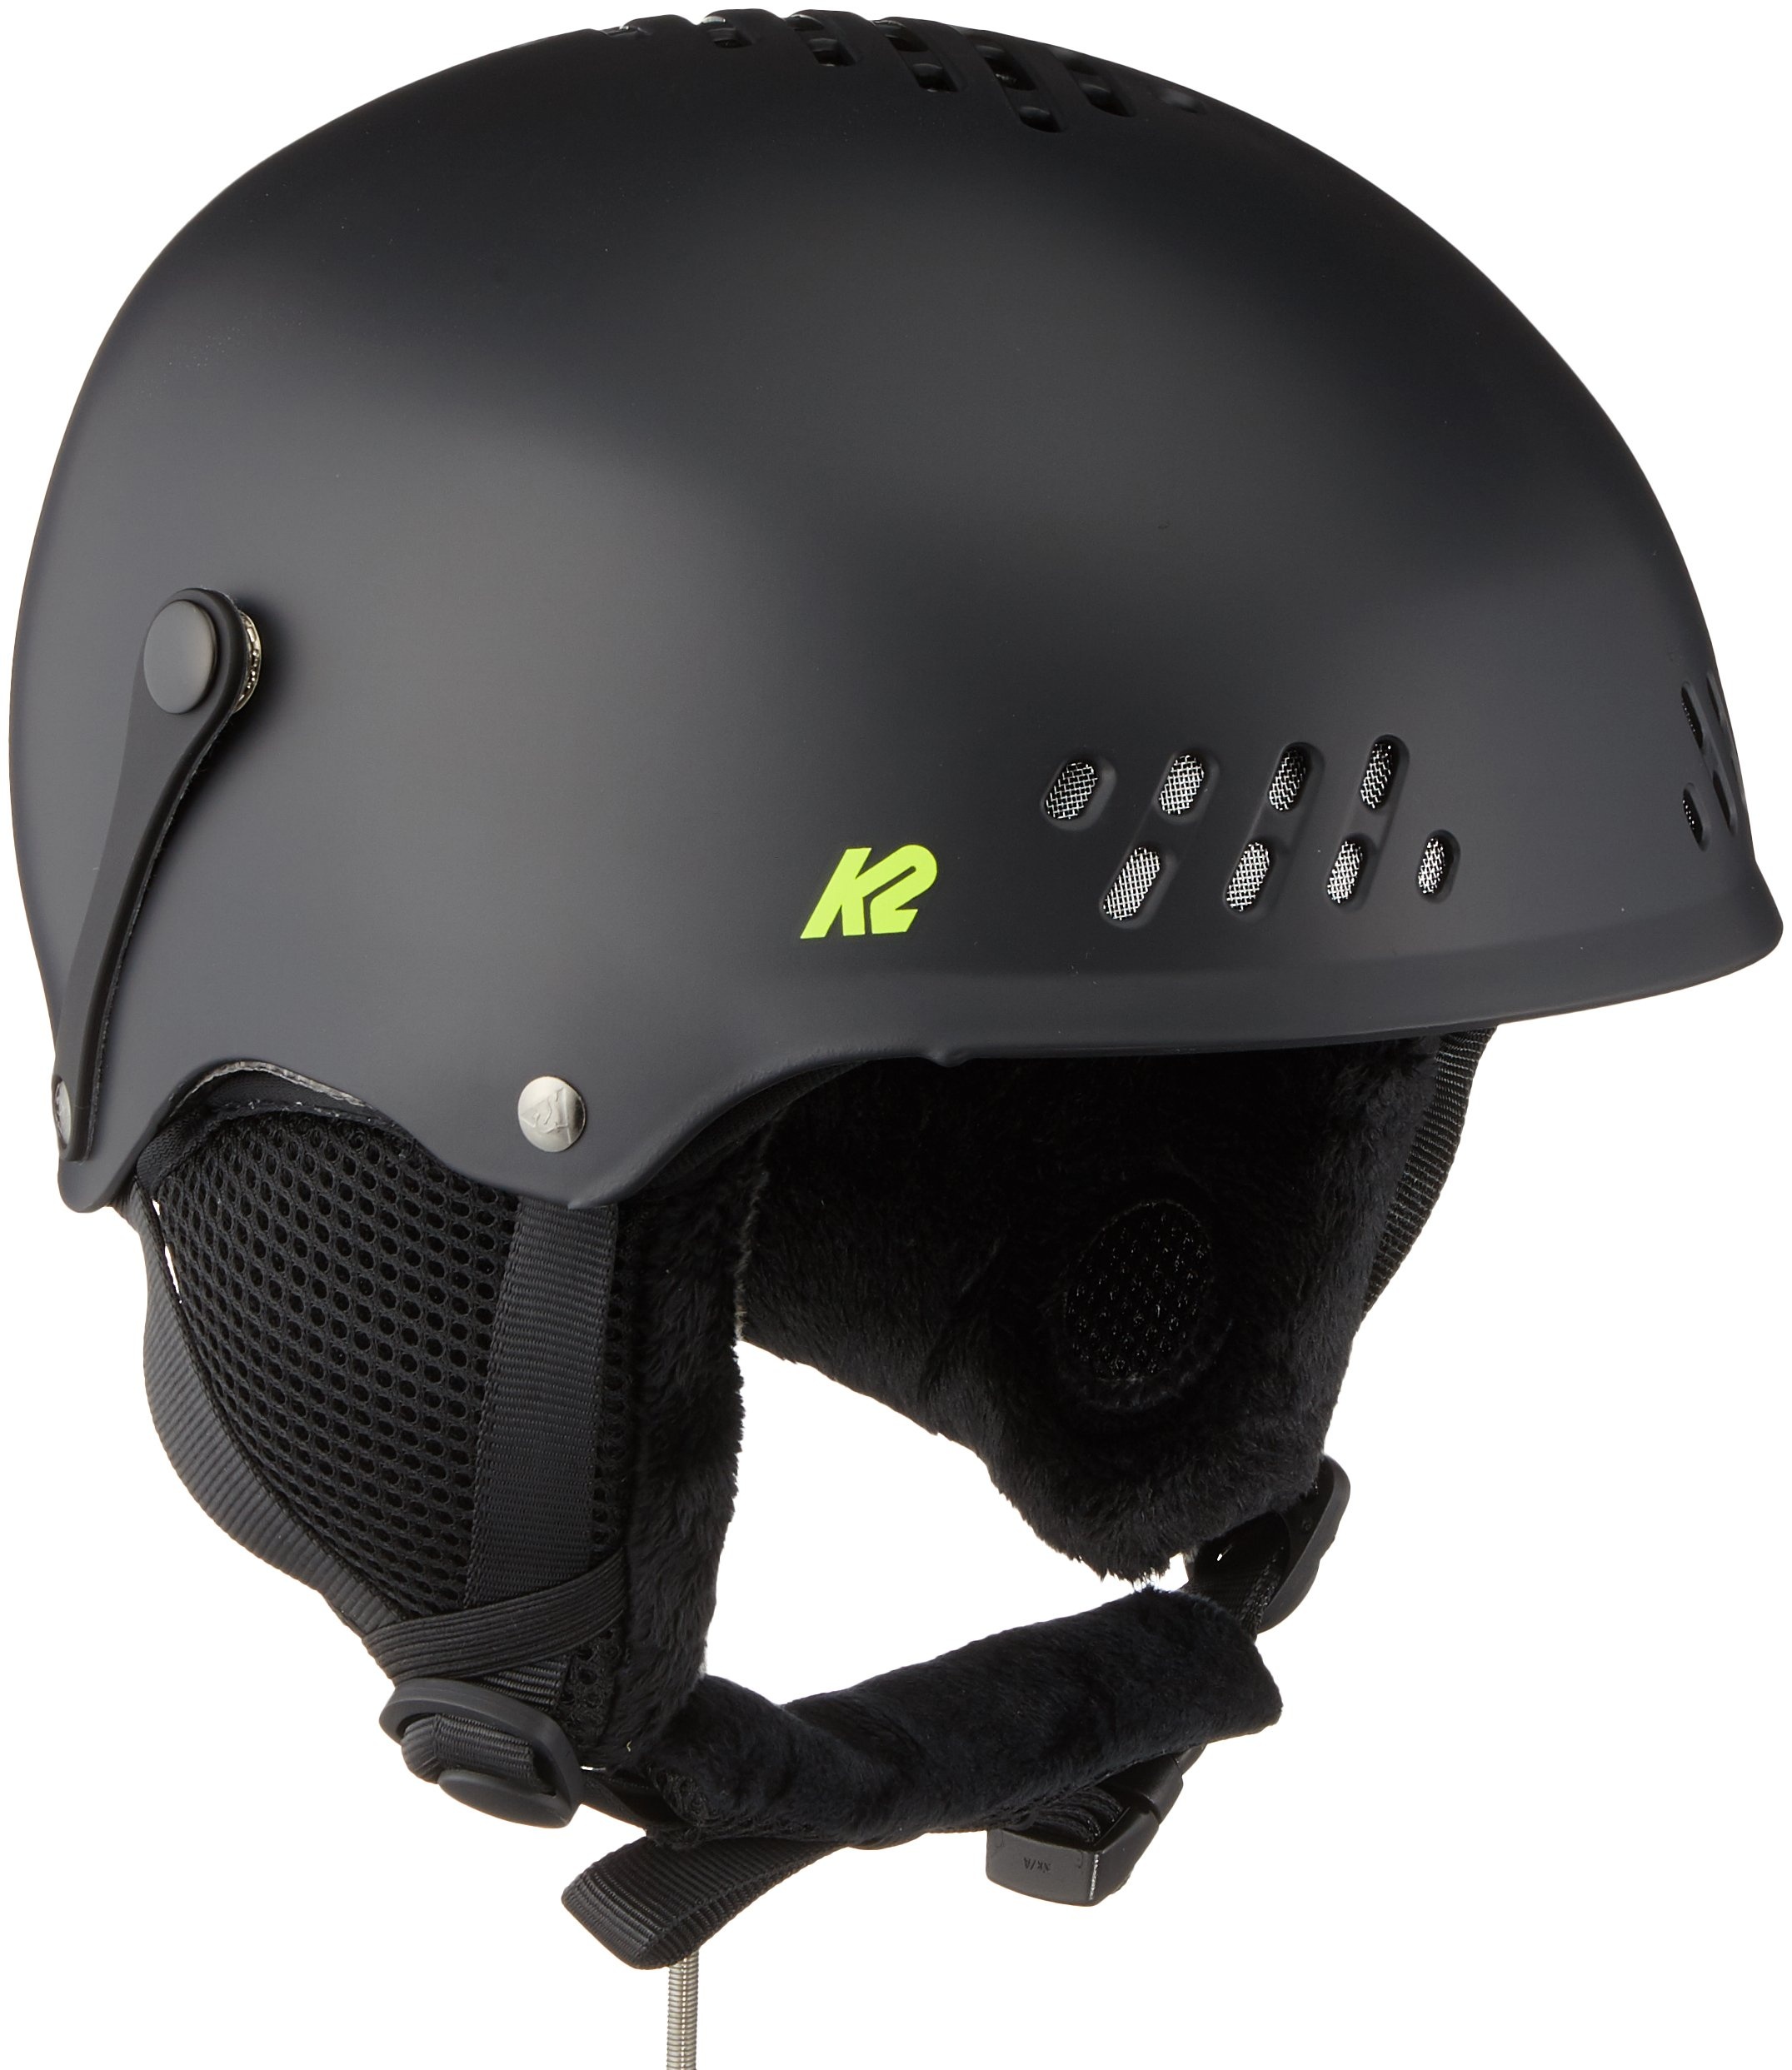 K2 Ski Kinder Helm Entity Schwarz matt 10A4003.2.1.XS Snowboard Snowboardhelm Kopfschutz Protektor